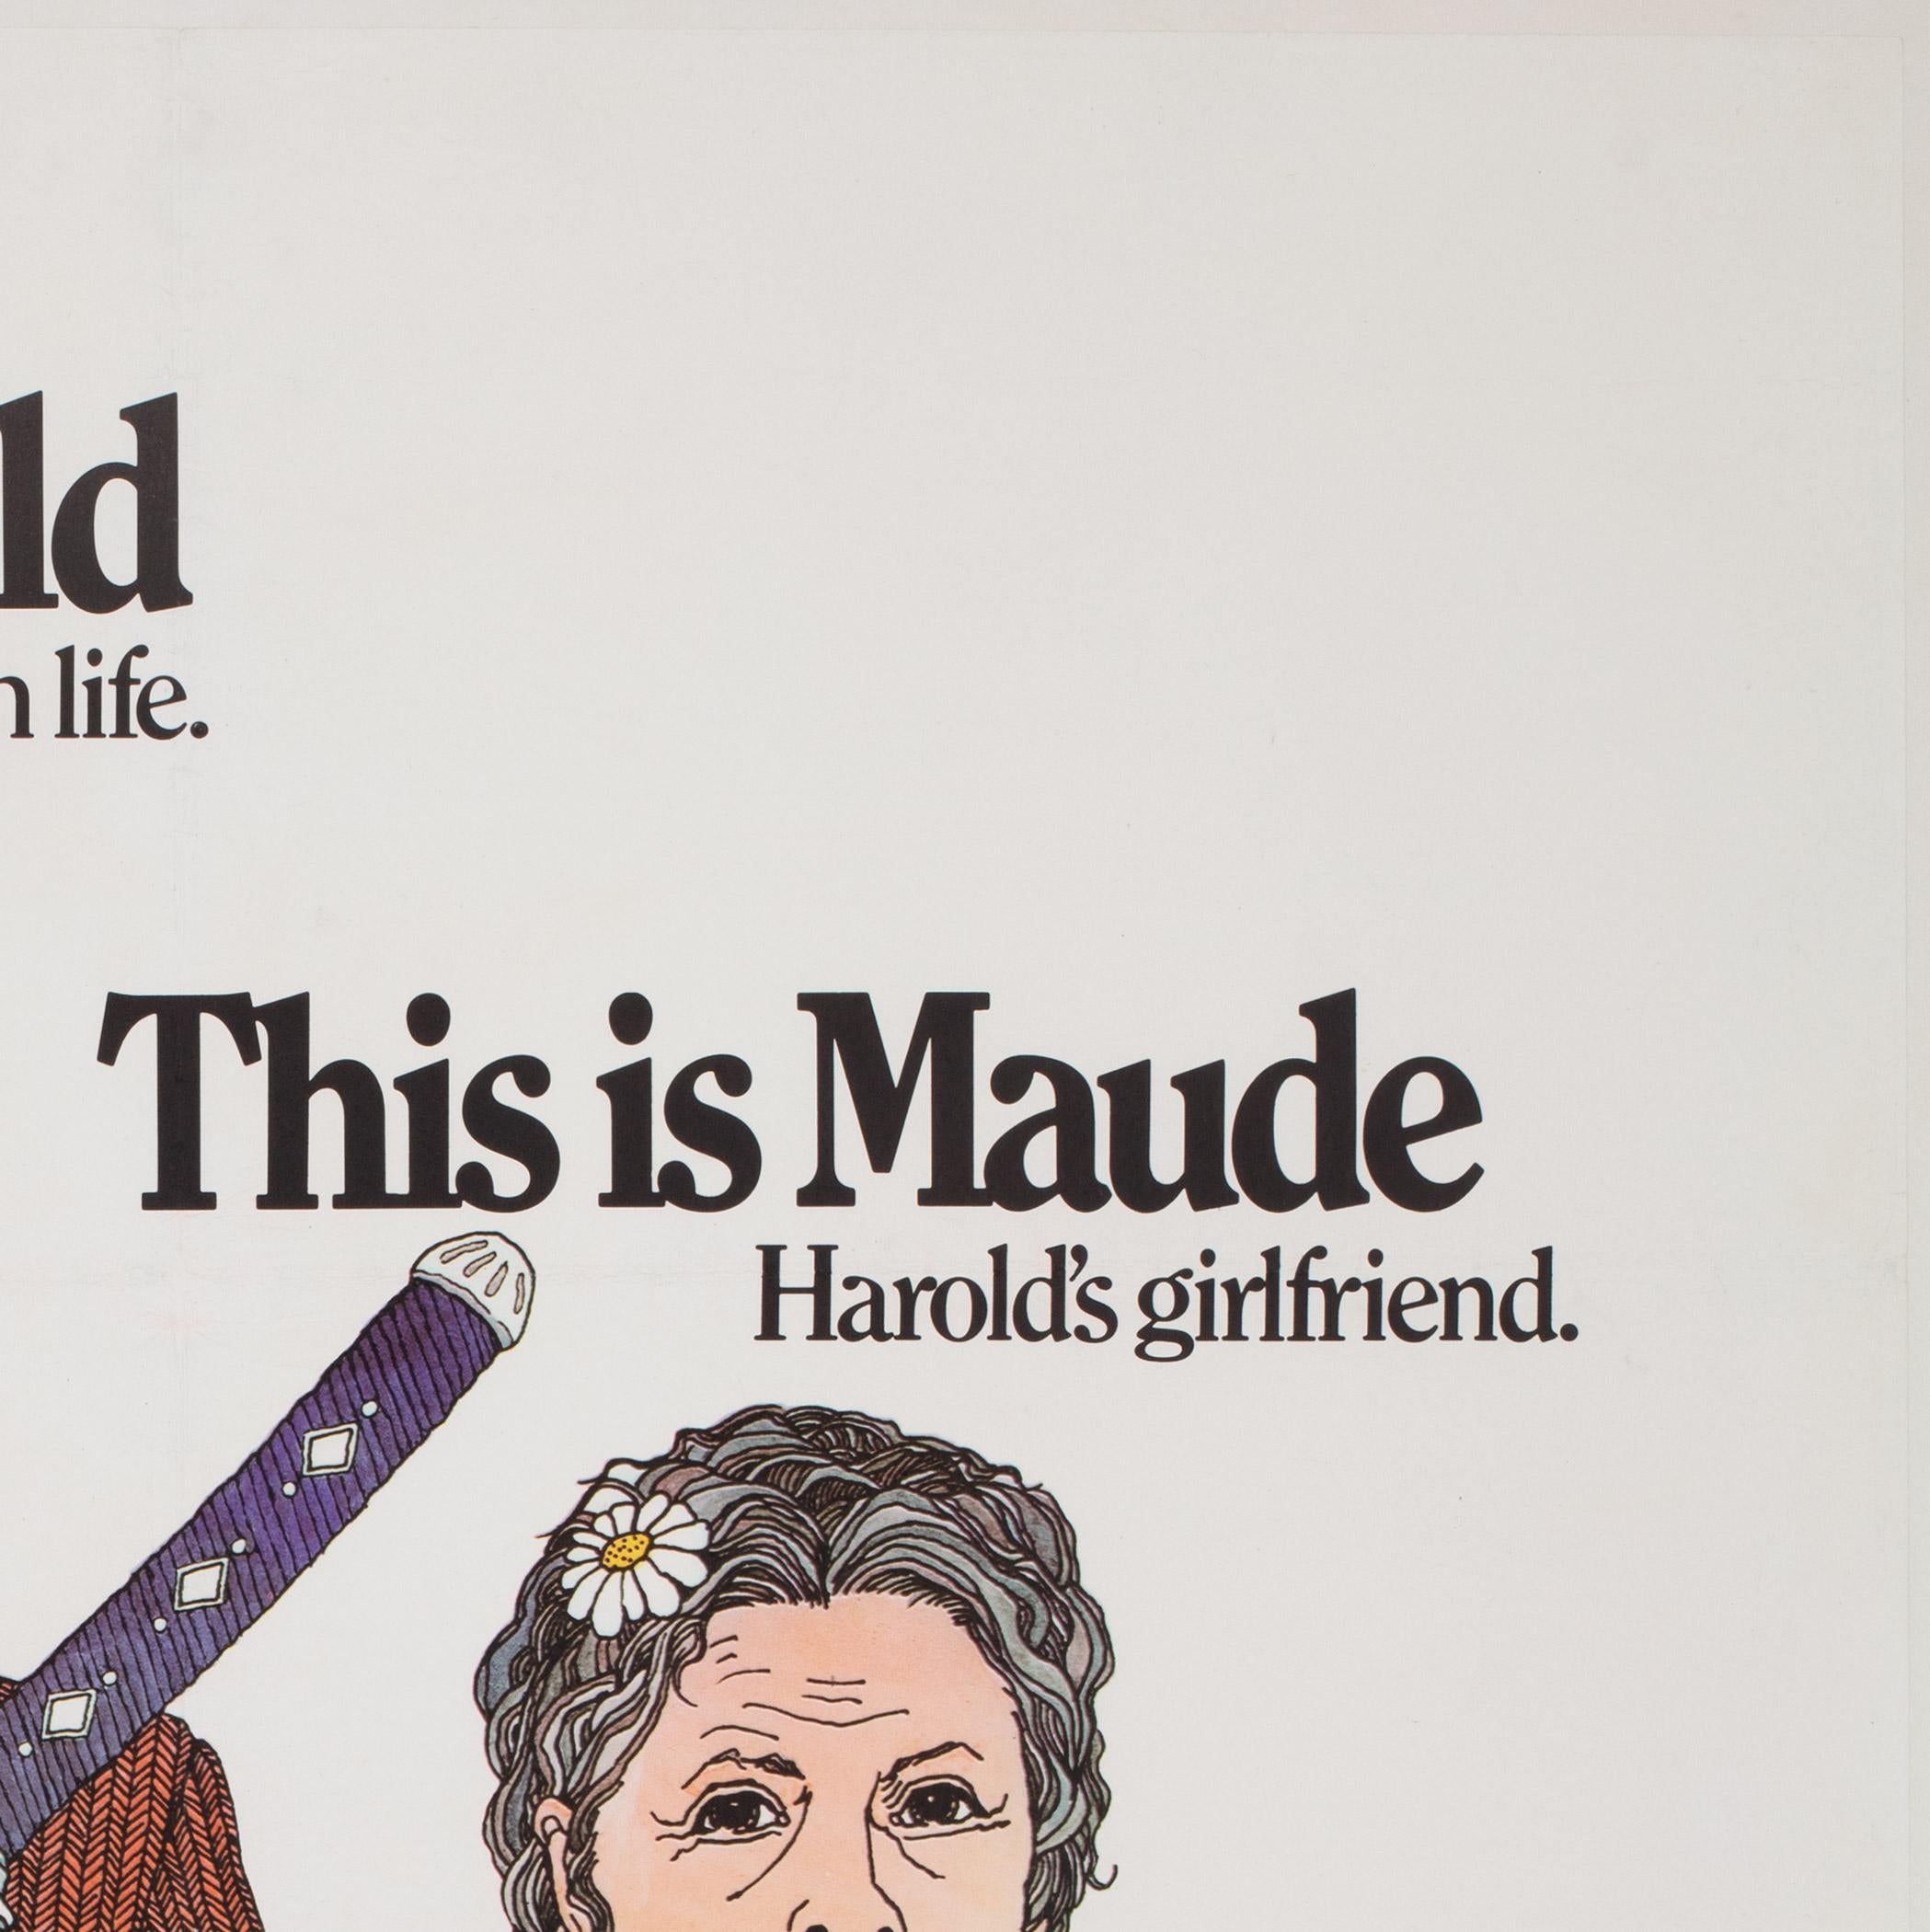 British Harold and Maude Original 1972 UK 1 Sheet Film Movie Poster For Sale